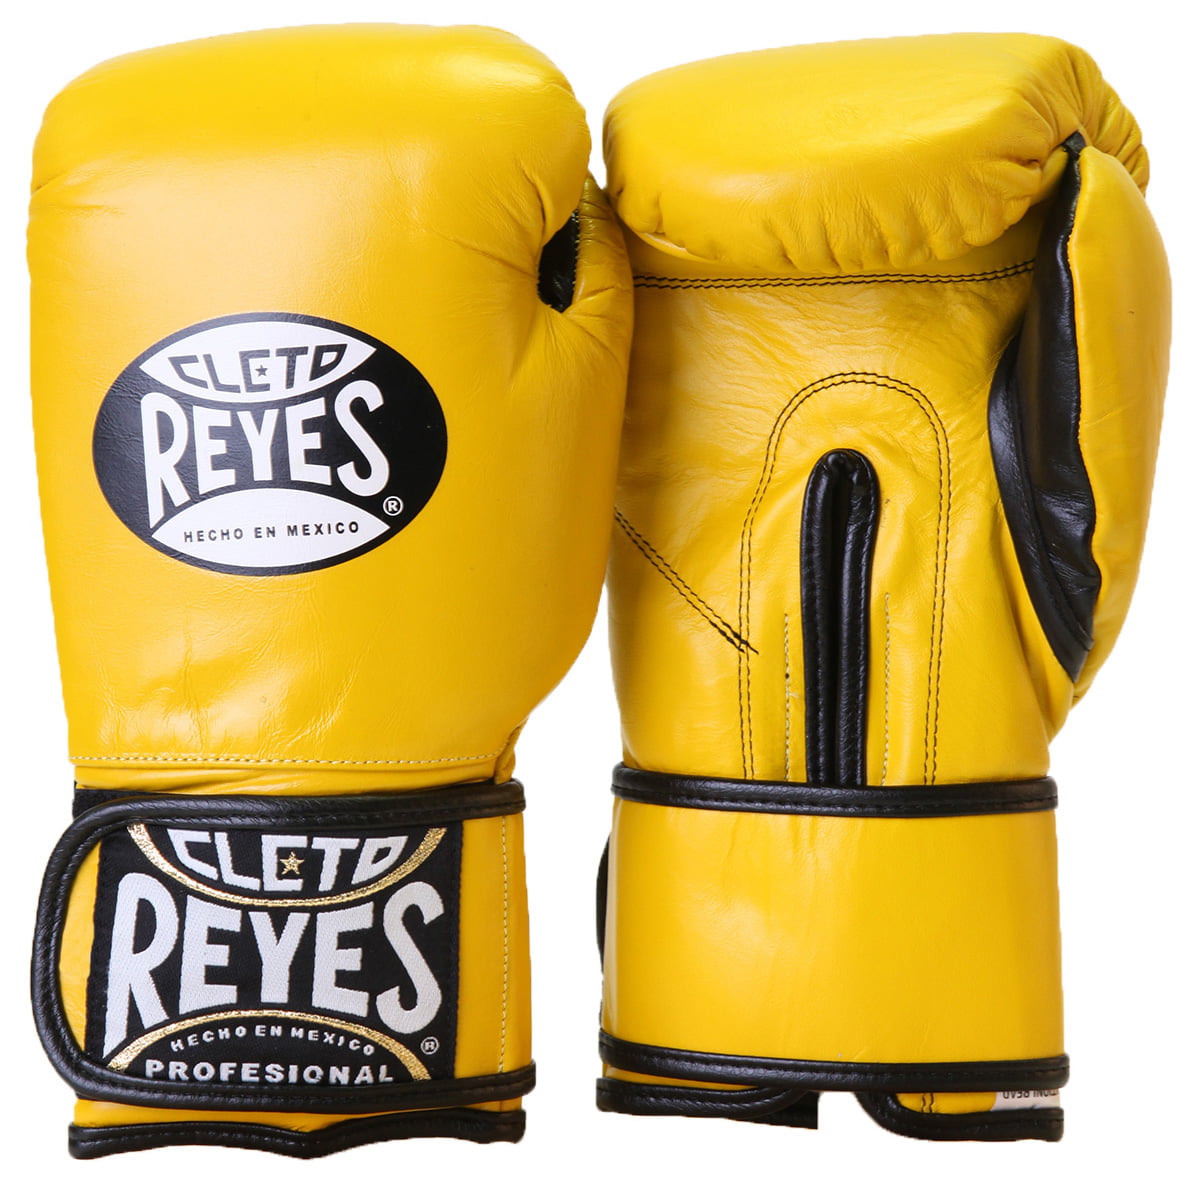 Cleto Reyes Miniature Boxing Glove Trousseau-Jaune 